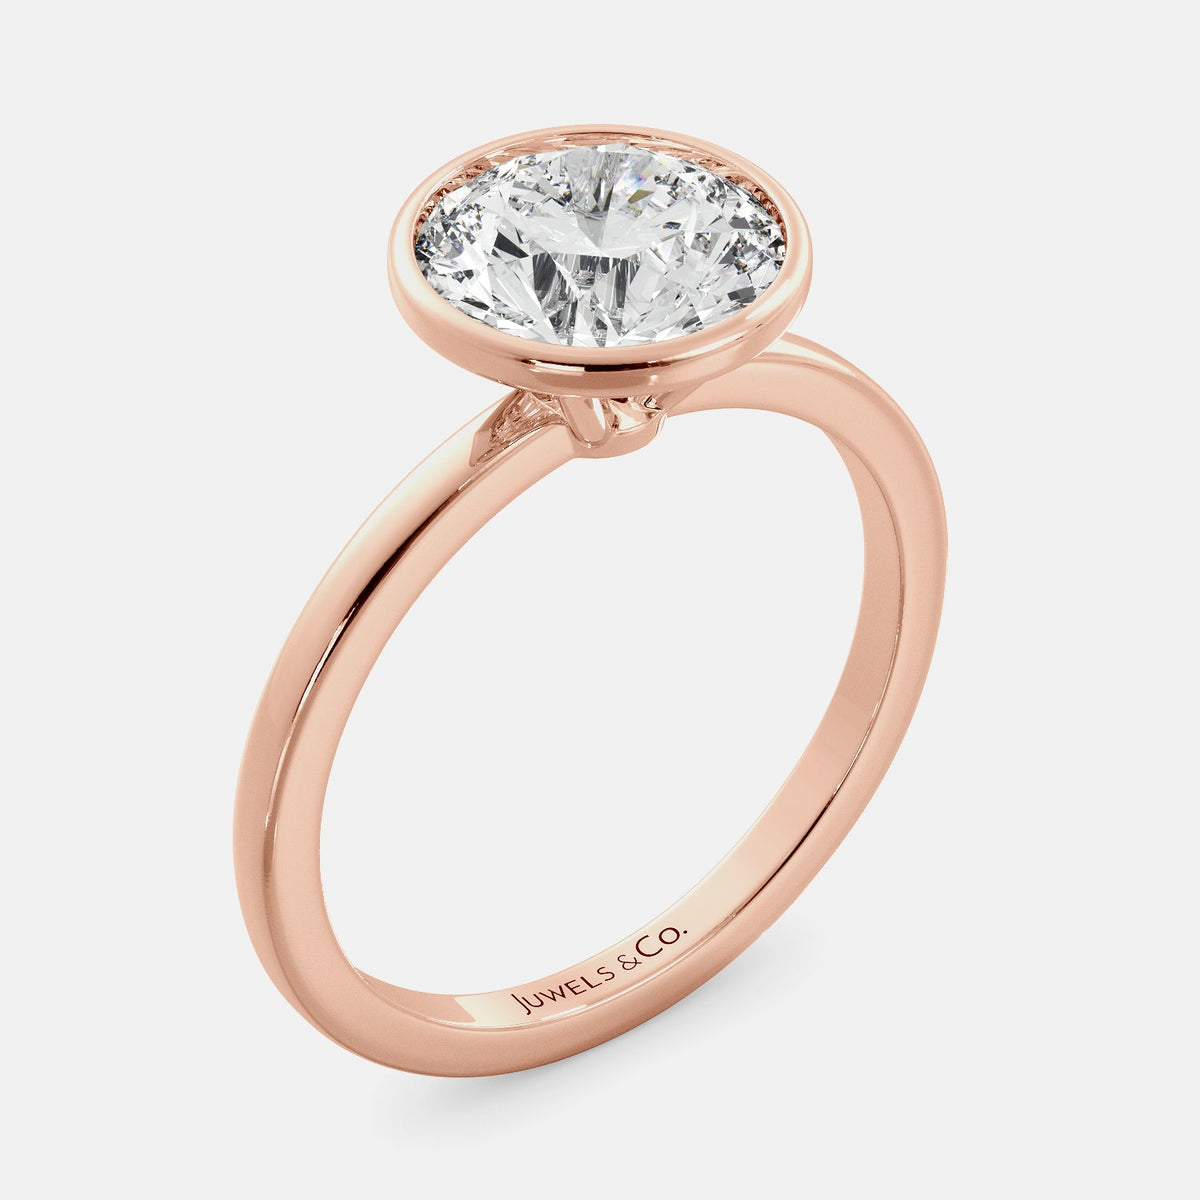 Round Bezel Diamond Ring